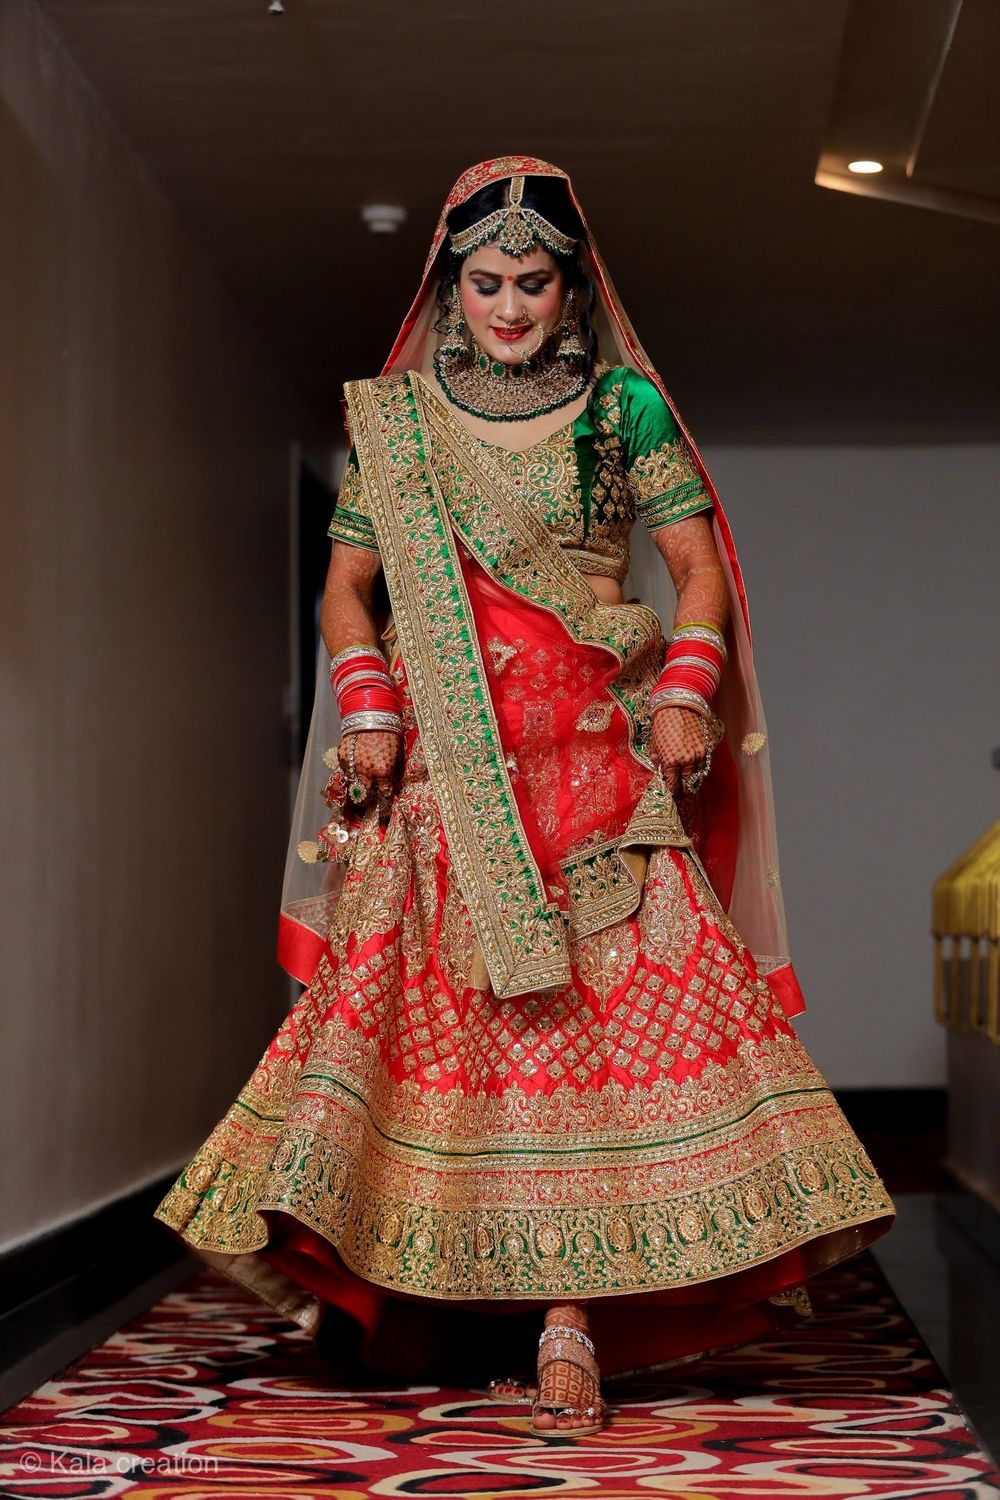 Photo From Rahul weds Neha - By Kala Creation